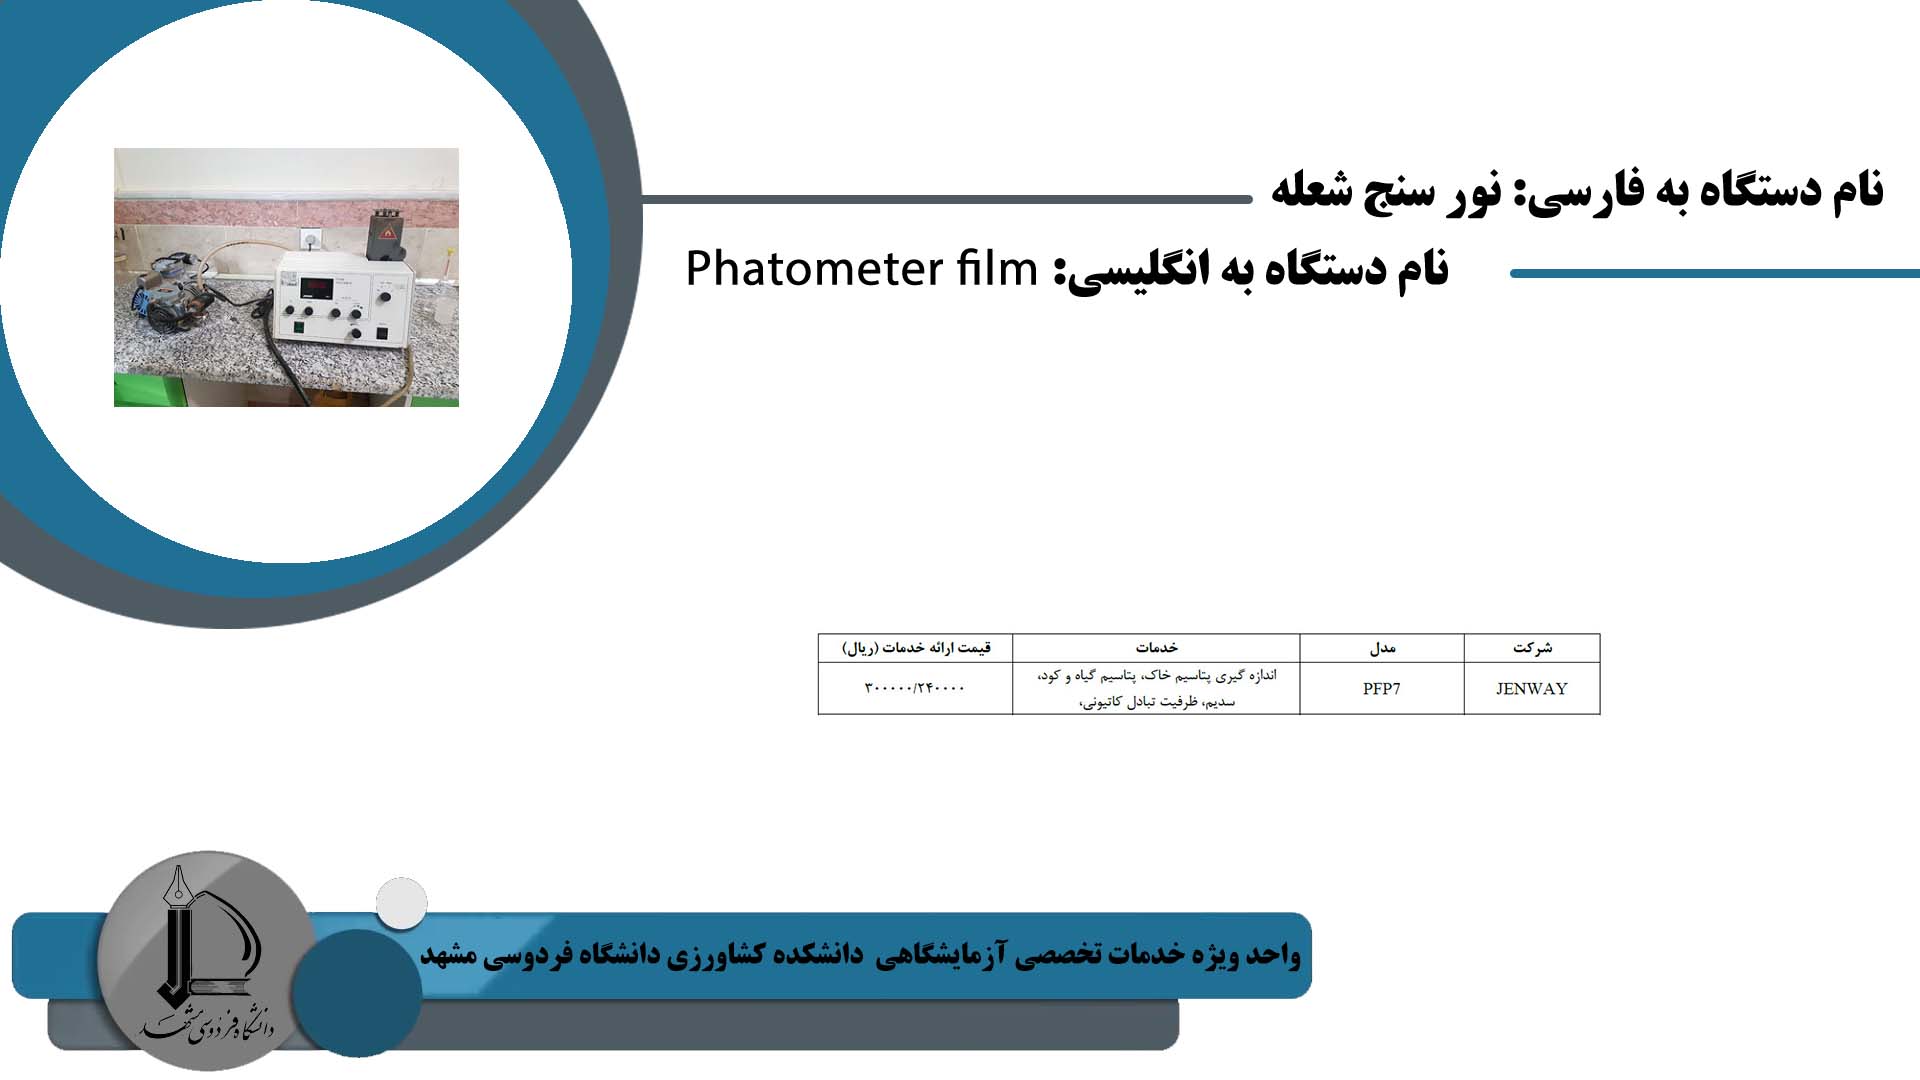 Phatometer film